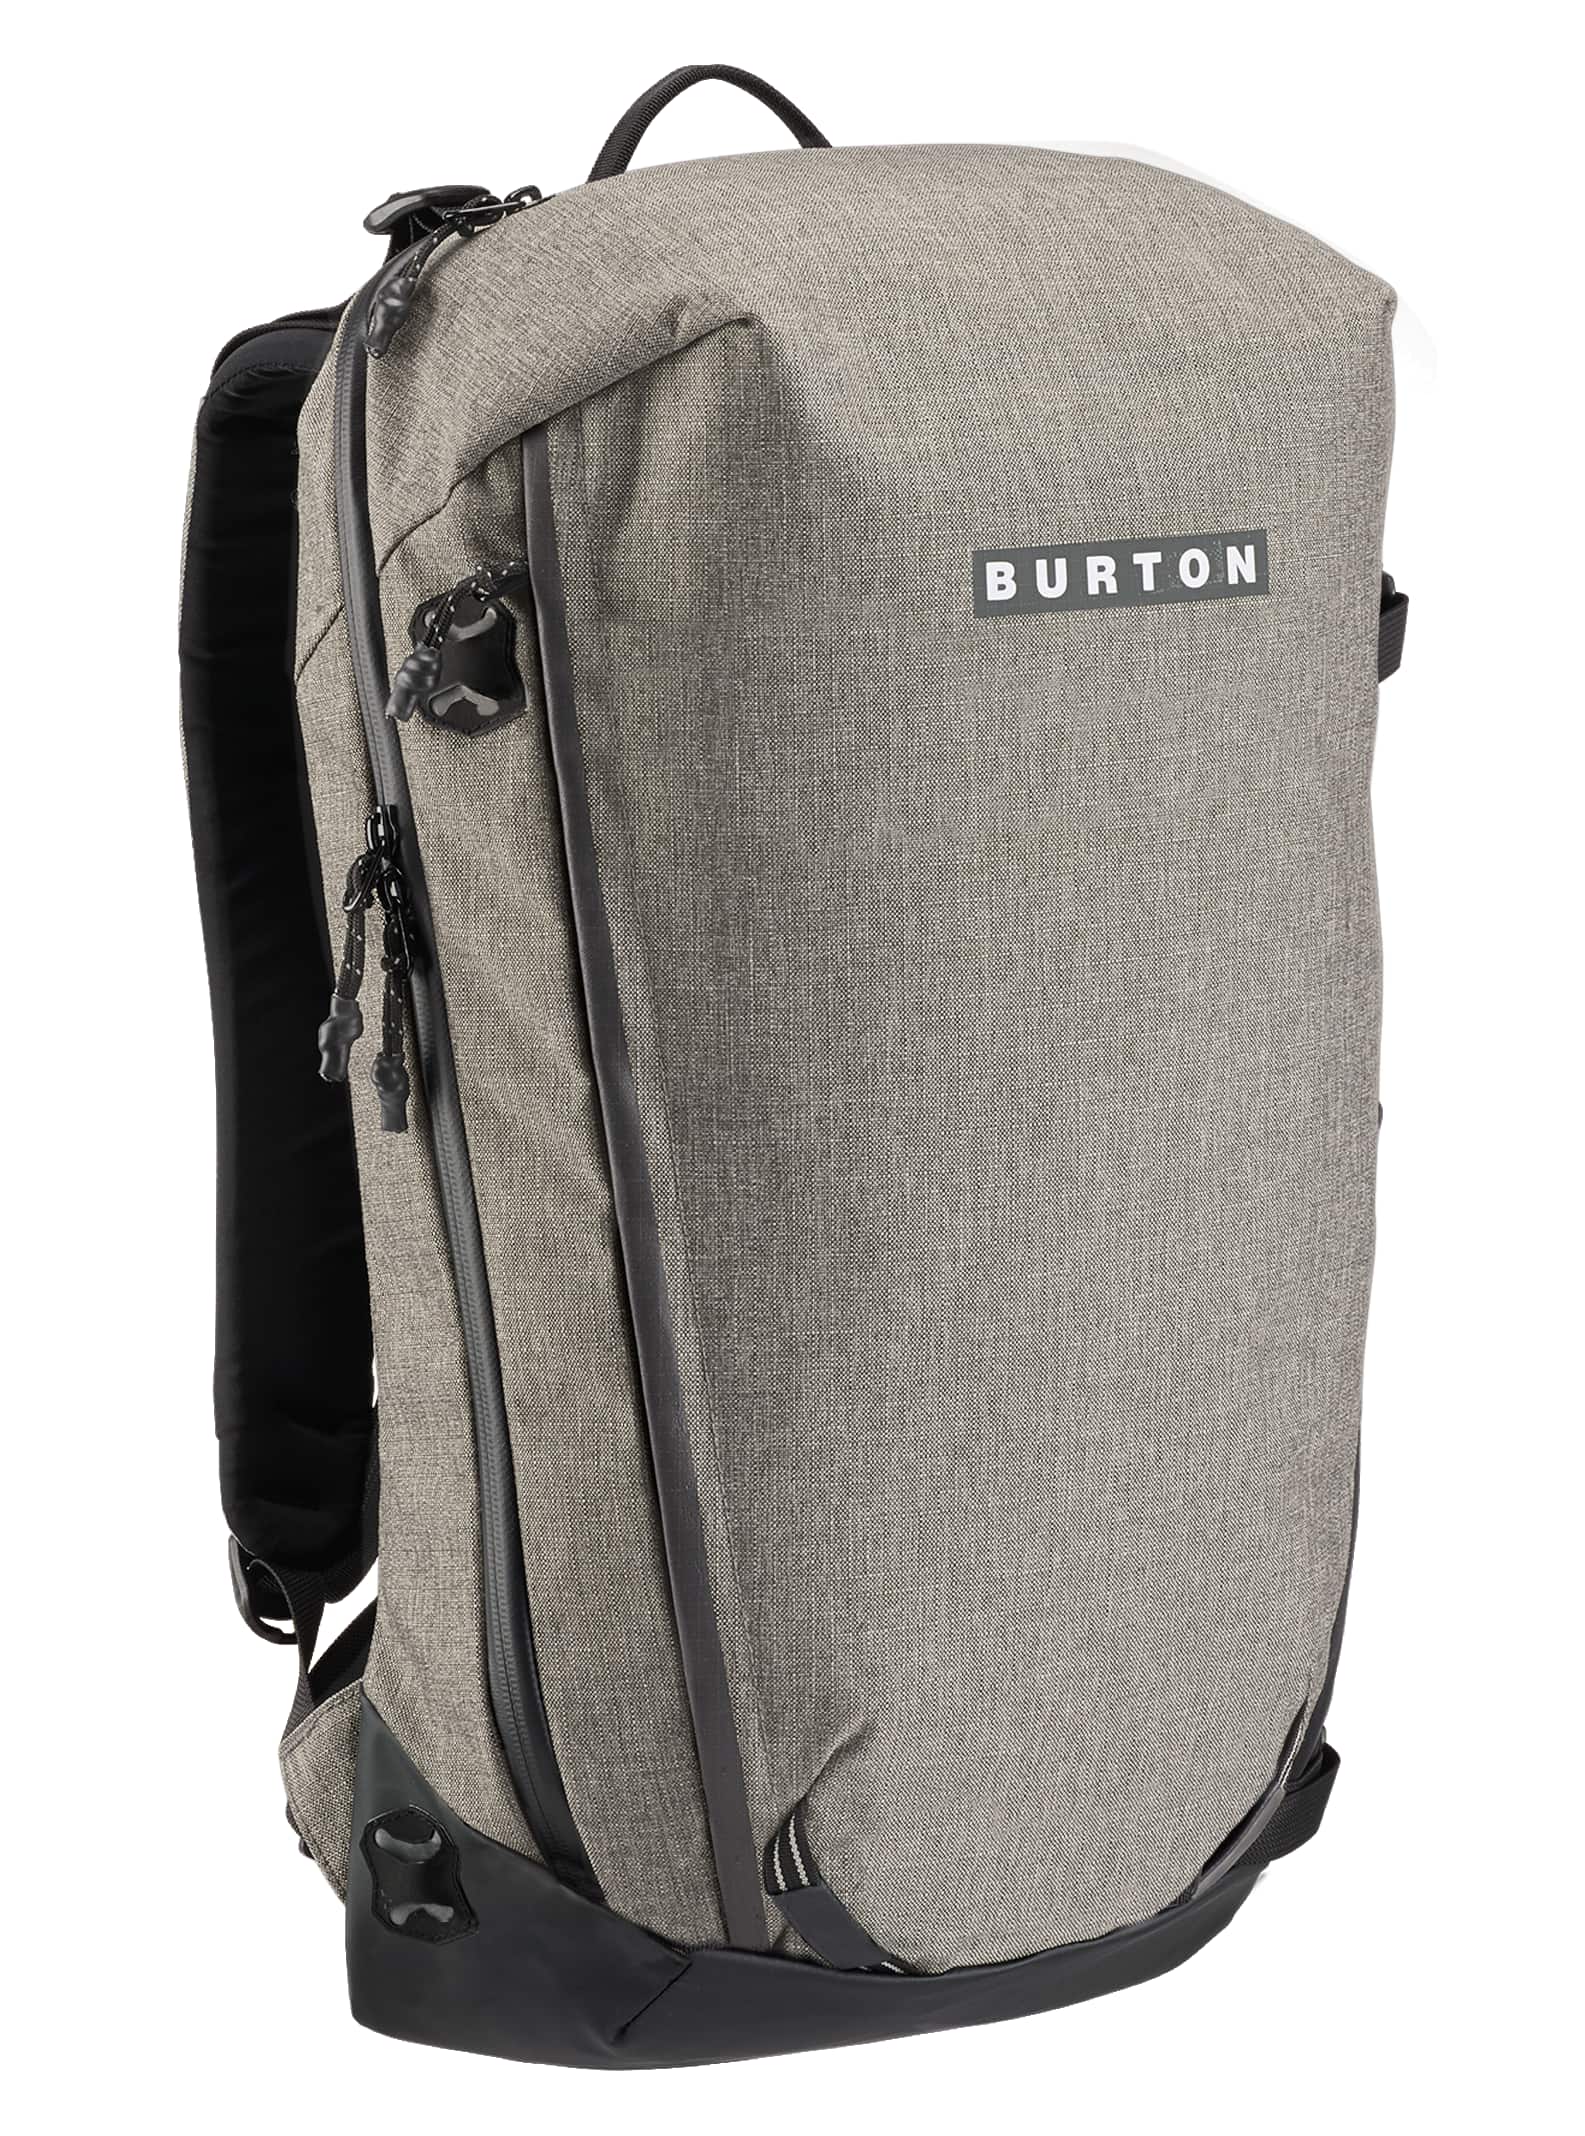 Burton Gorge Backpack | Burton.com Fall 2019 US